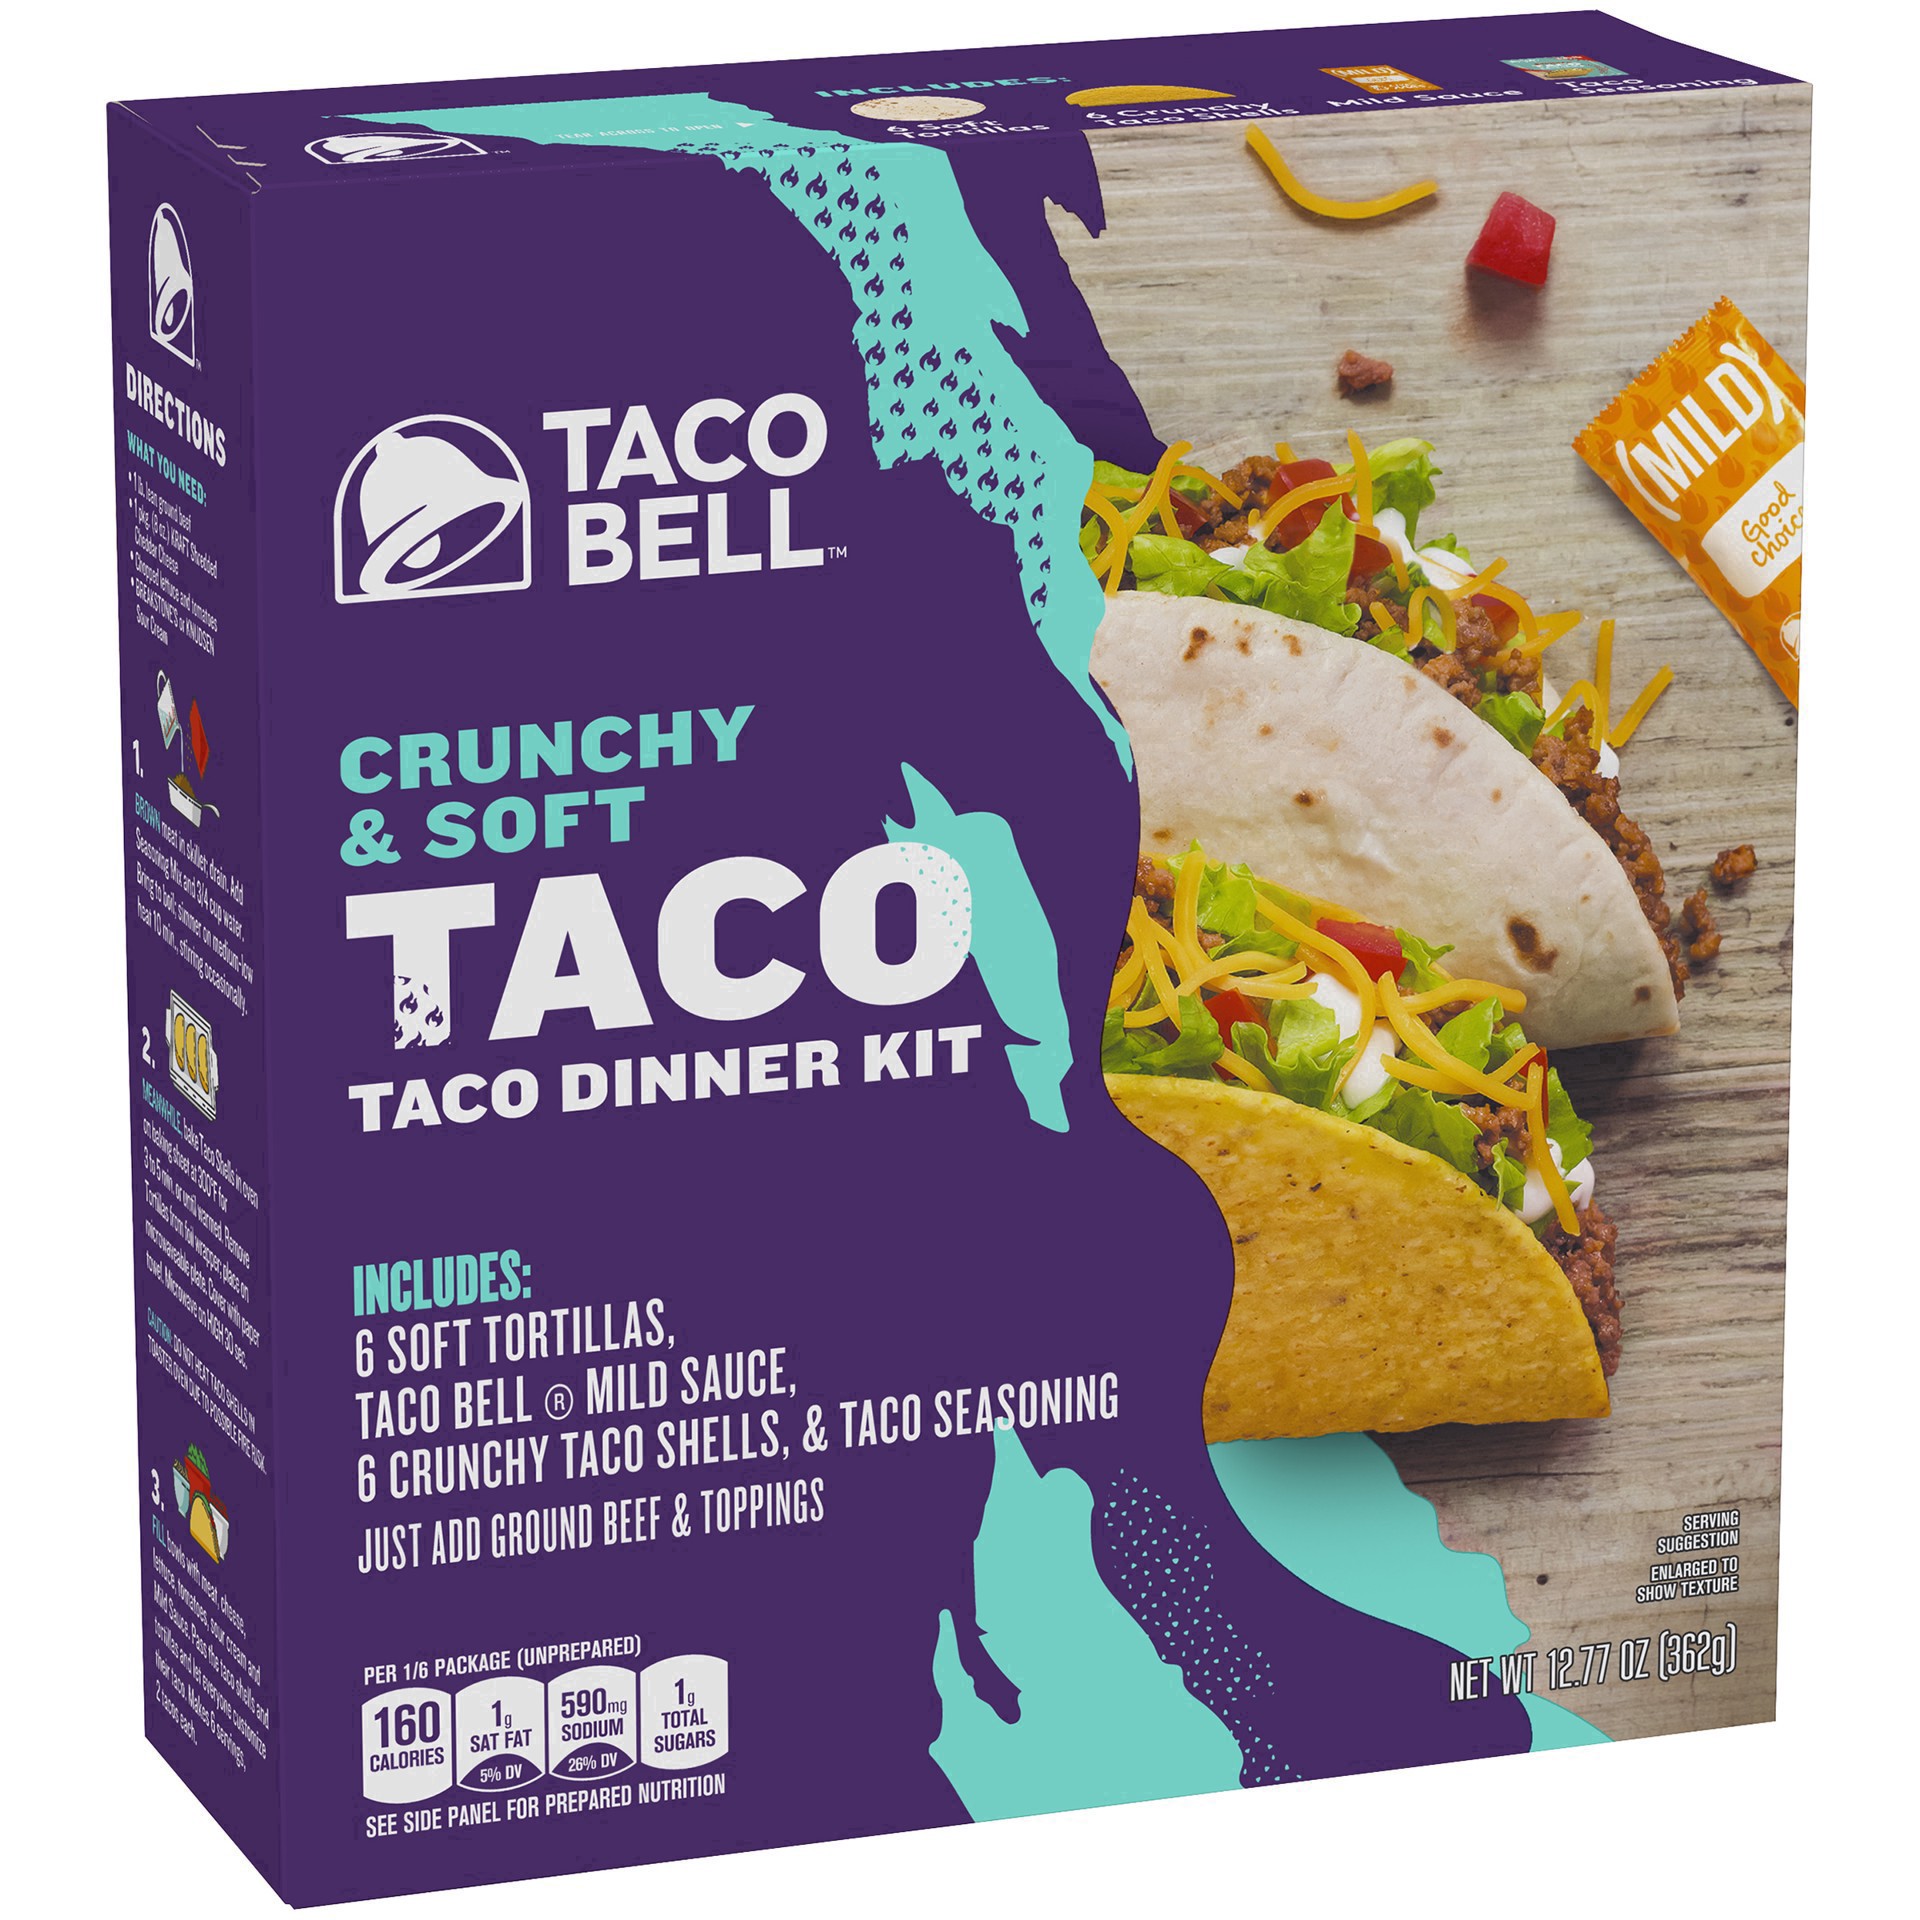 slide 77 of 101, Taco Bell Crunchy & Soft Taco Cravings Kit with 6 Soft Tortillas, 6 Crunchy Taco Shells, Taco Bell Mild Sauce & Seasoning, 12.77 oz Box, 1 ea